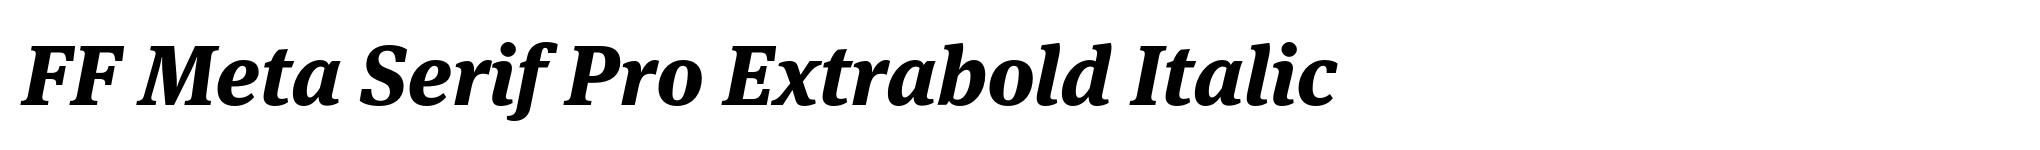 FF Meta Serif Pro Extrabold Italic image